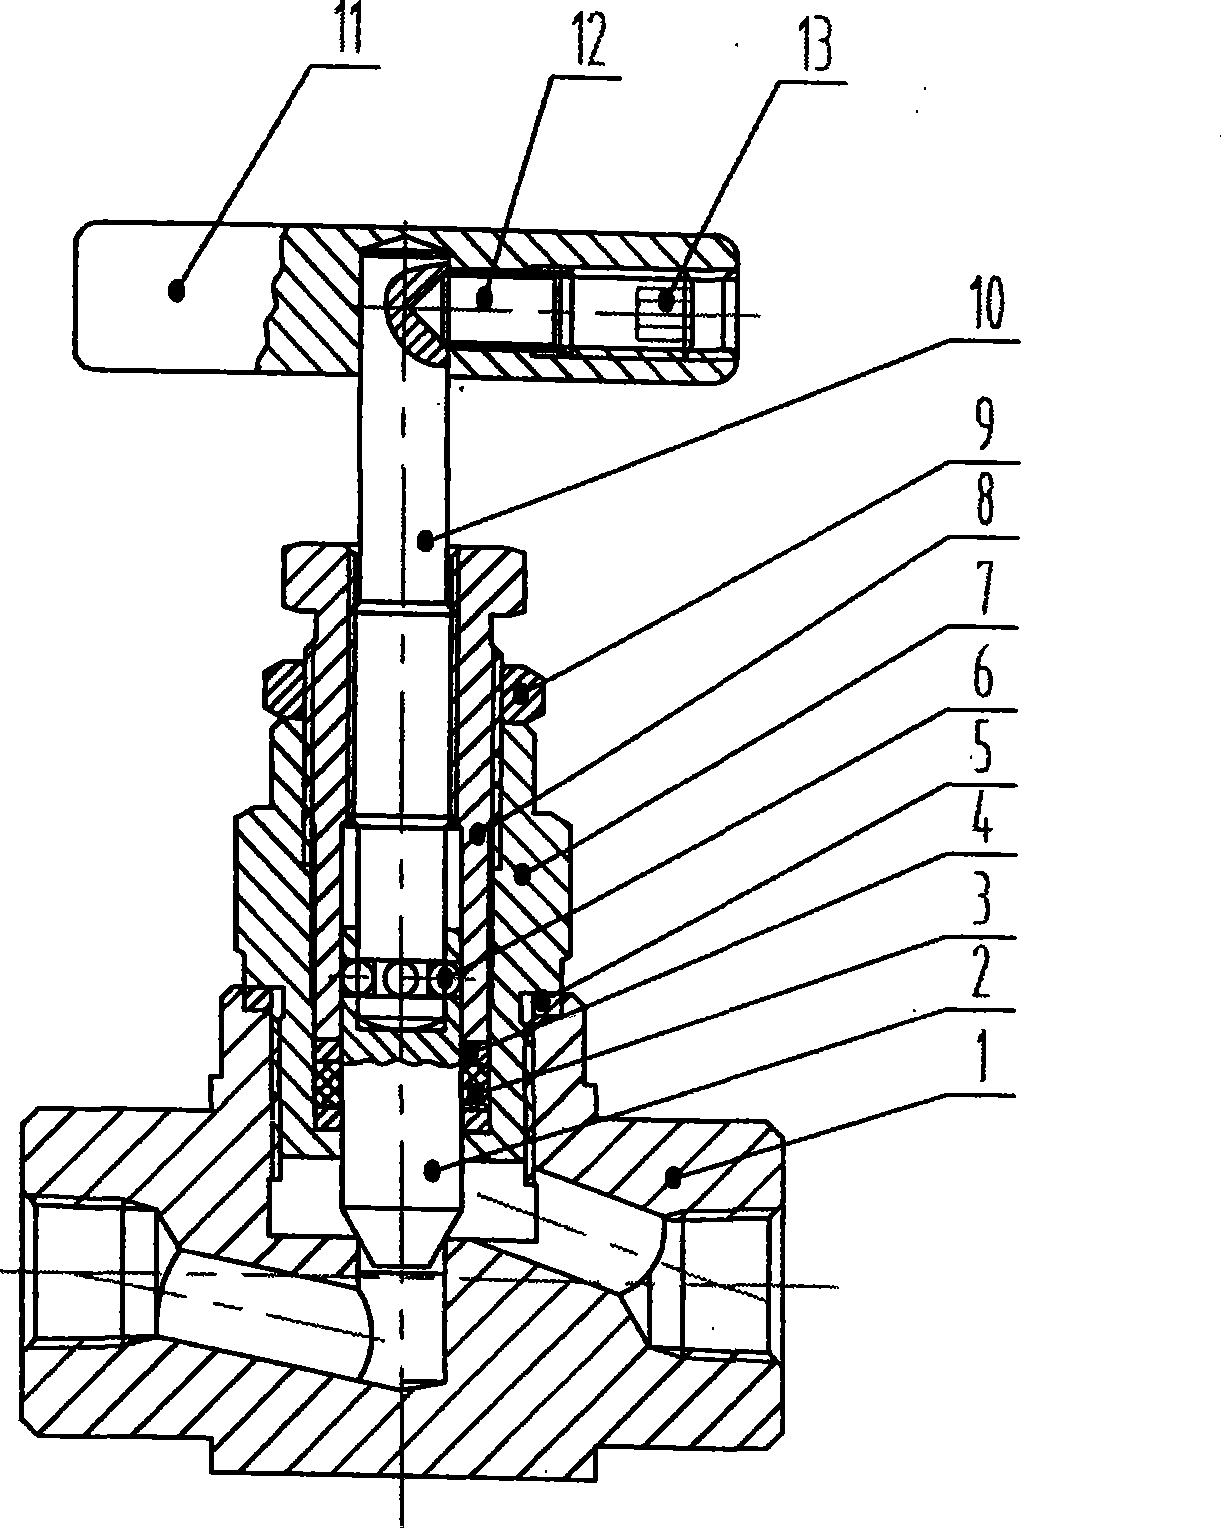 Instrument break valve with lower valve stem non-rotation sealing structure